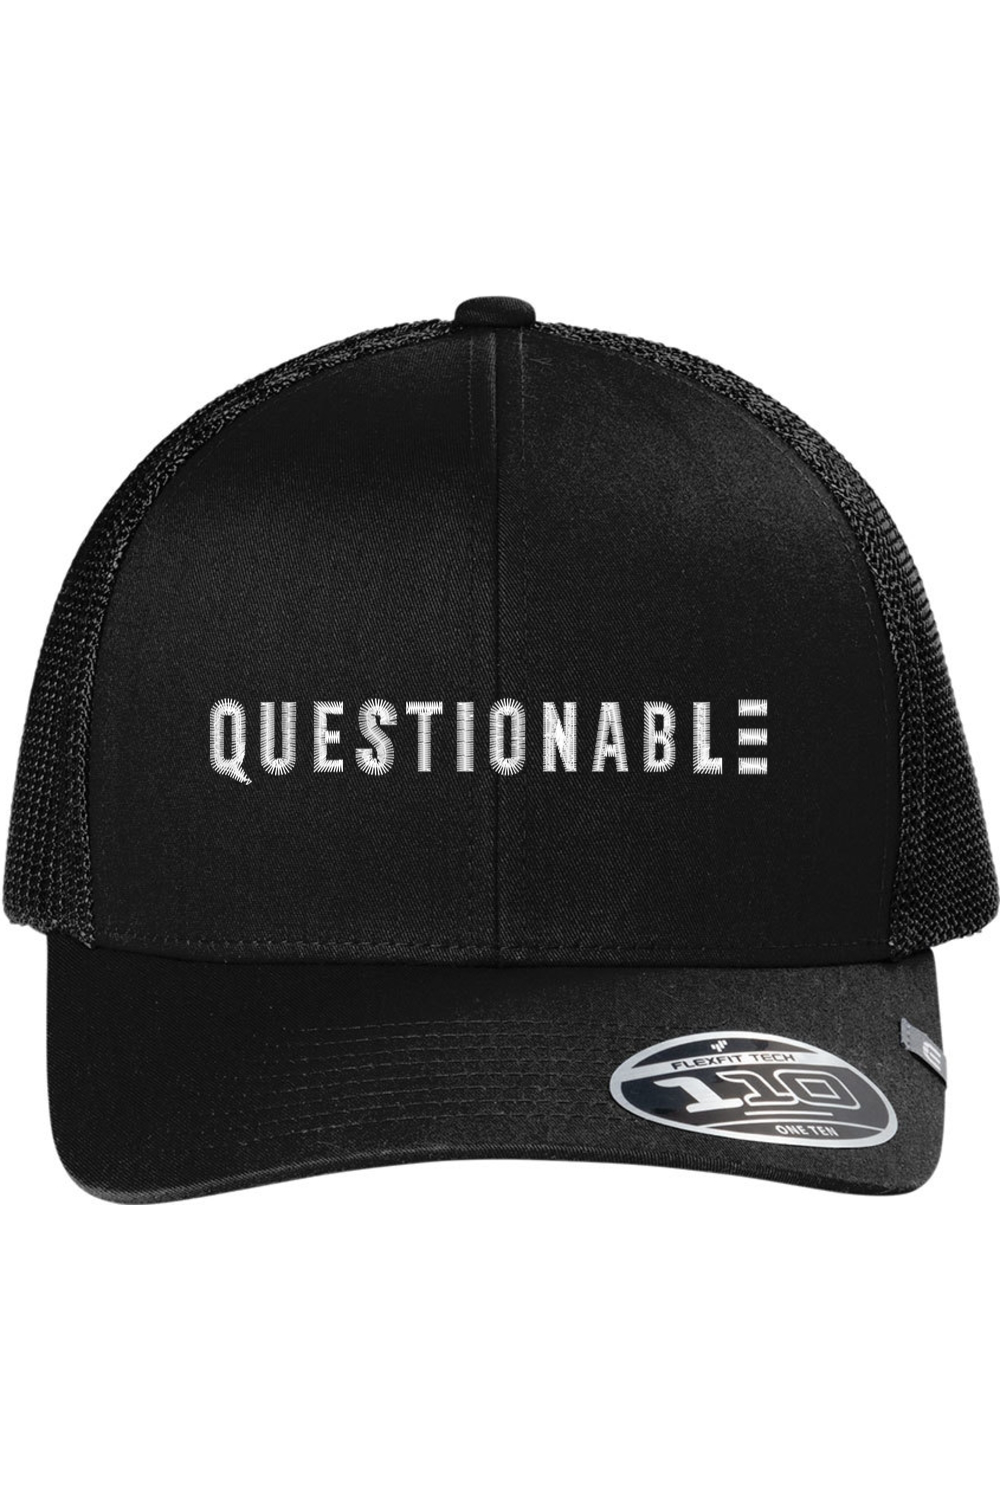 Questionable TravisMathew Trucker Cap - Embroidered